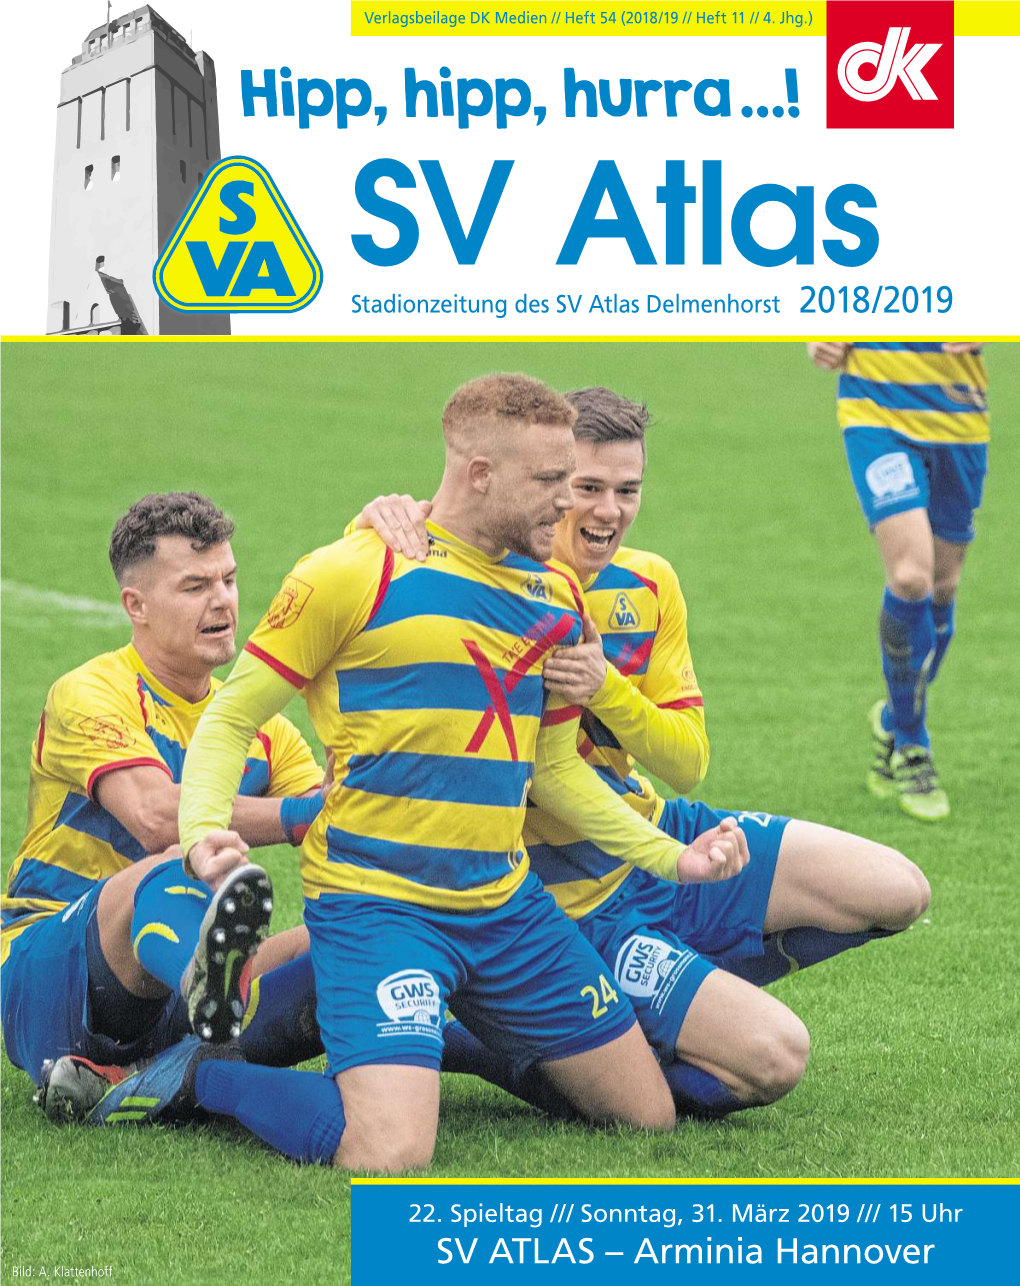 SV Atlas Stadionzeitung Des SV Atlas Delmenhorst 2018/2019